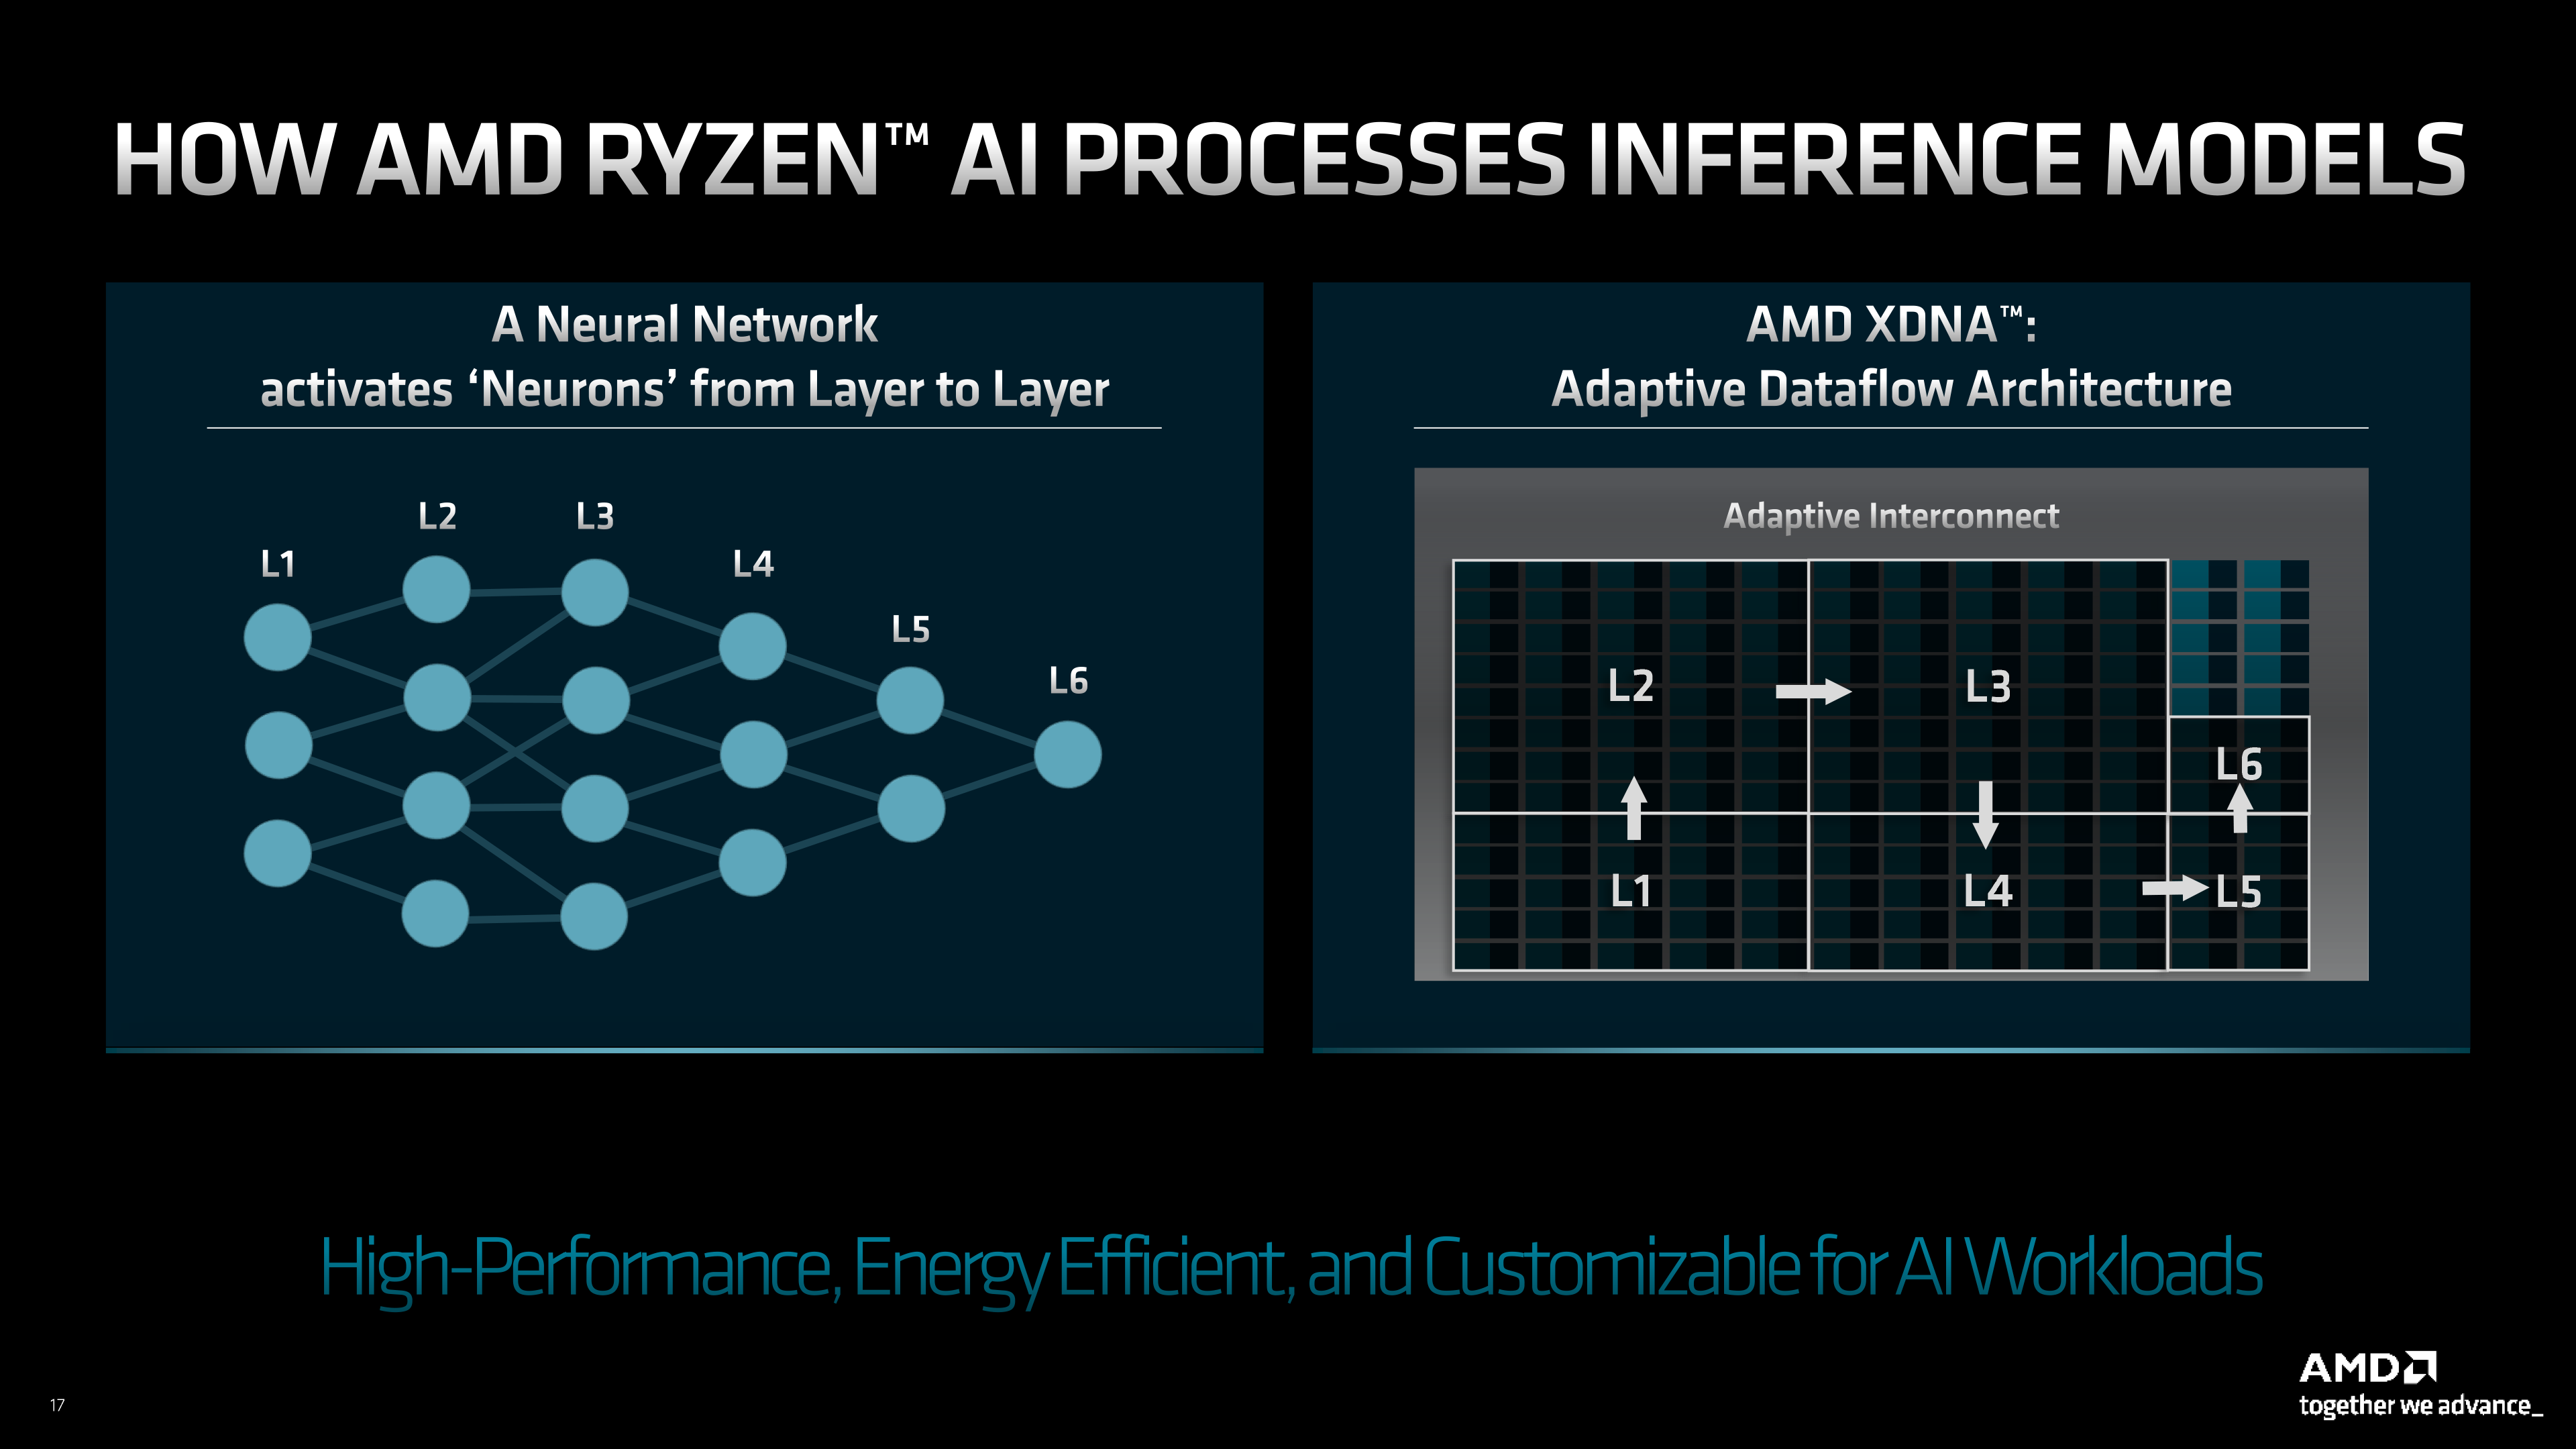 AMD Ryzen 7040HS Processor